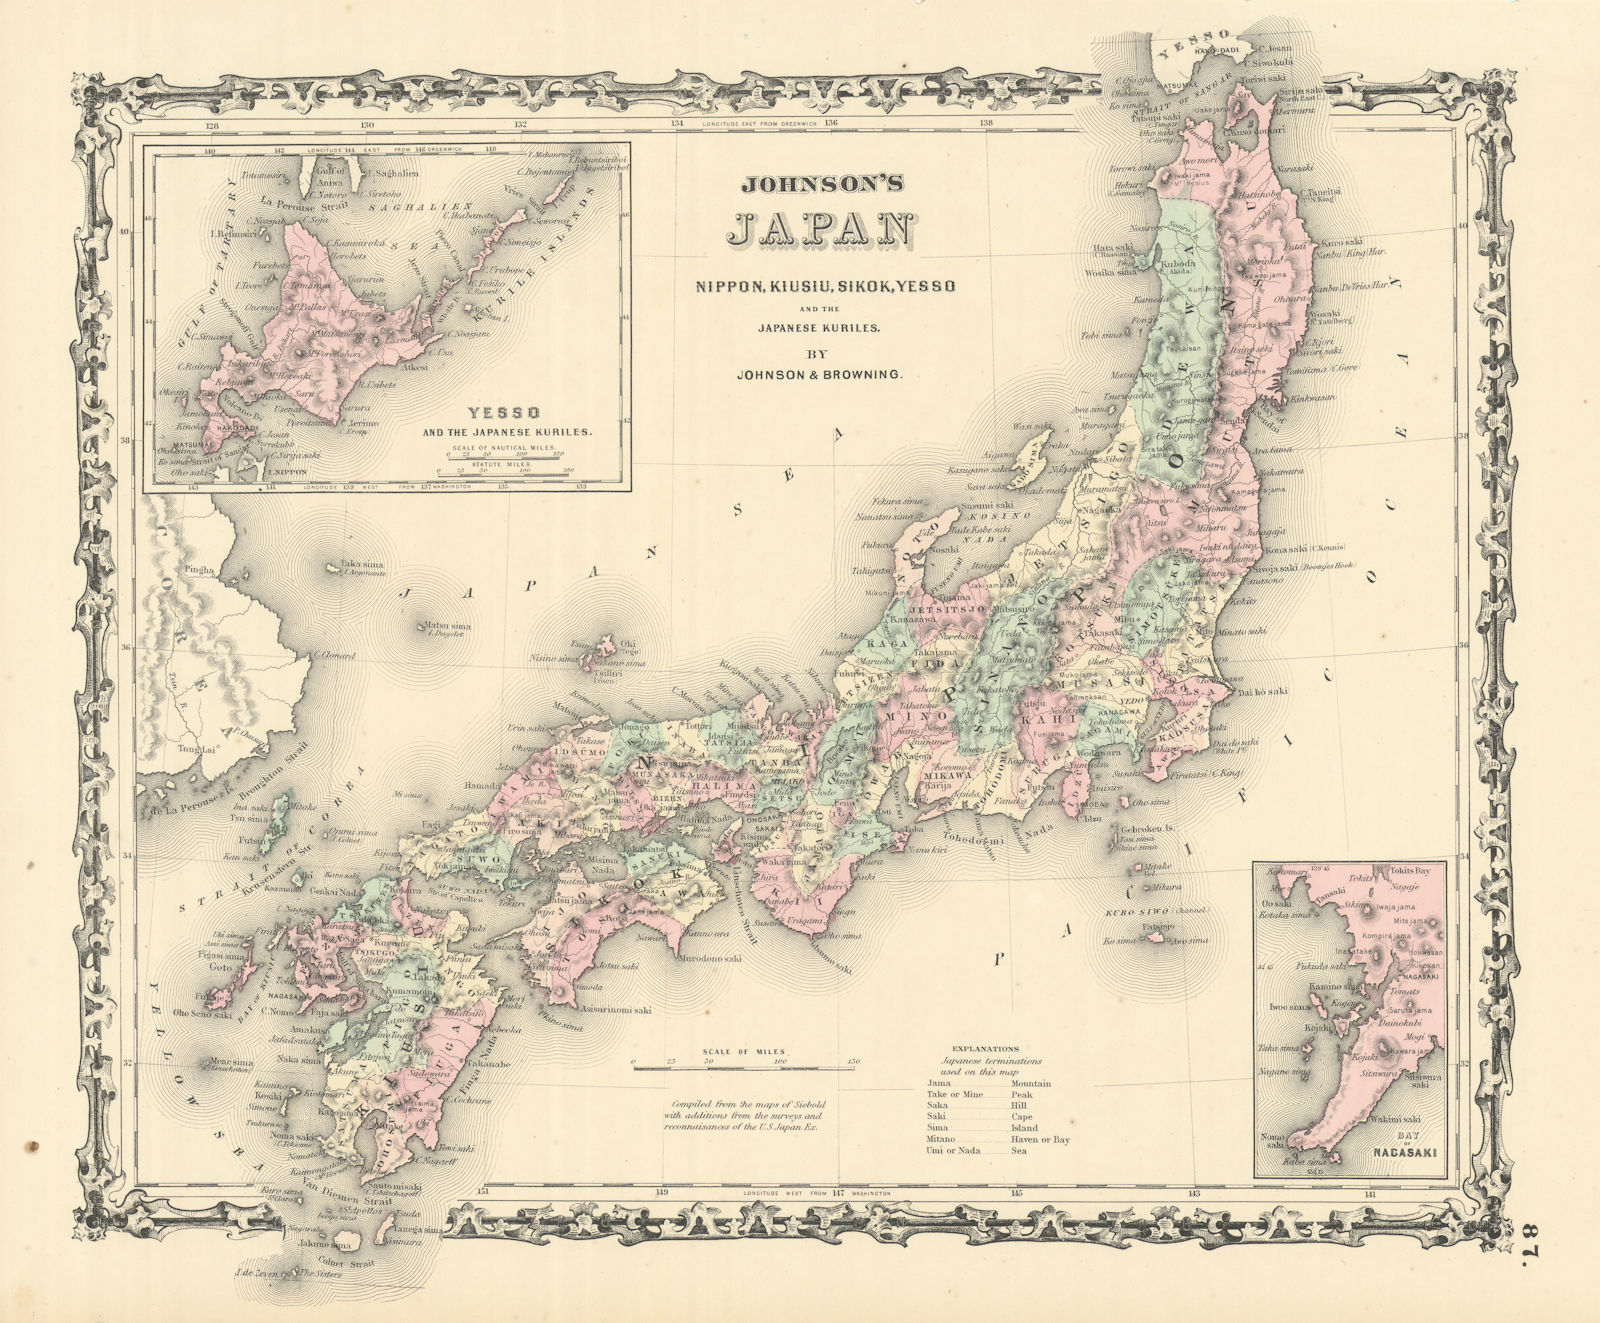 Johnson's Japan, Nippon, Kiusiu, Sikok, Yesso & Kuriles. Nagasaki Bay 1861 map